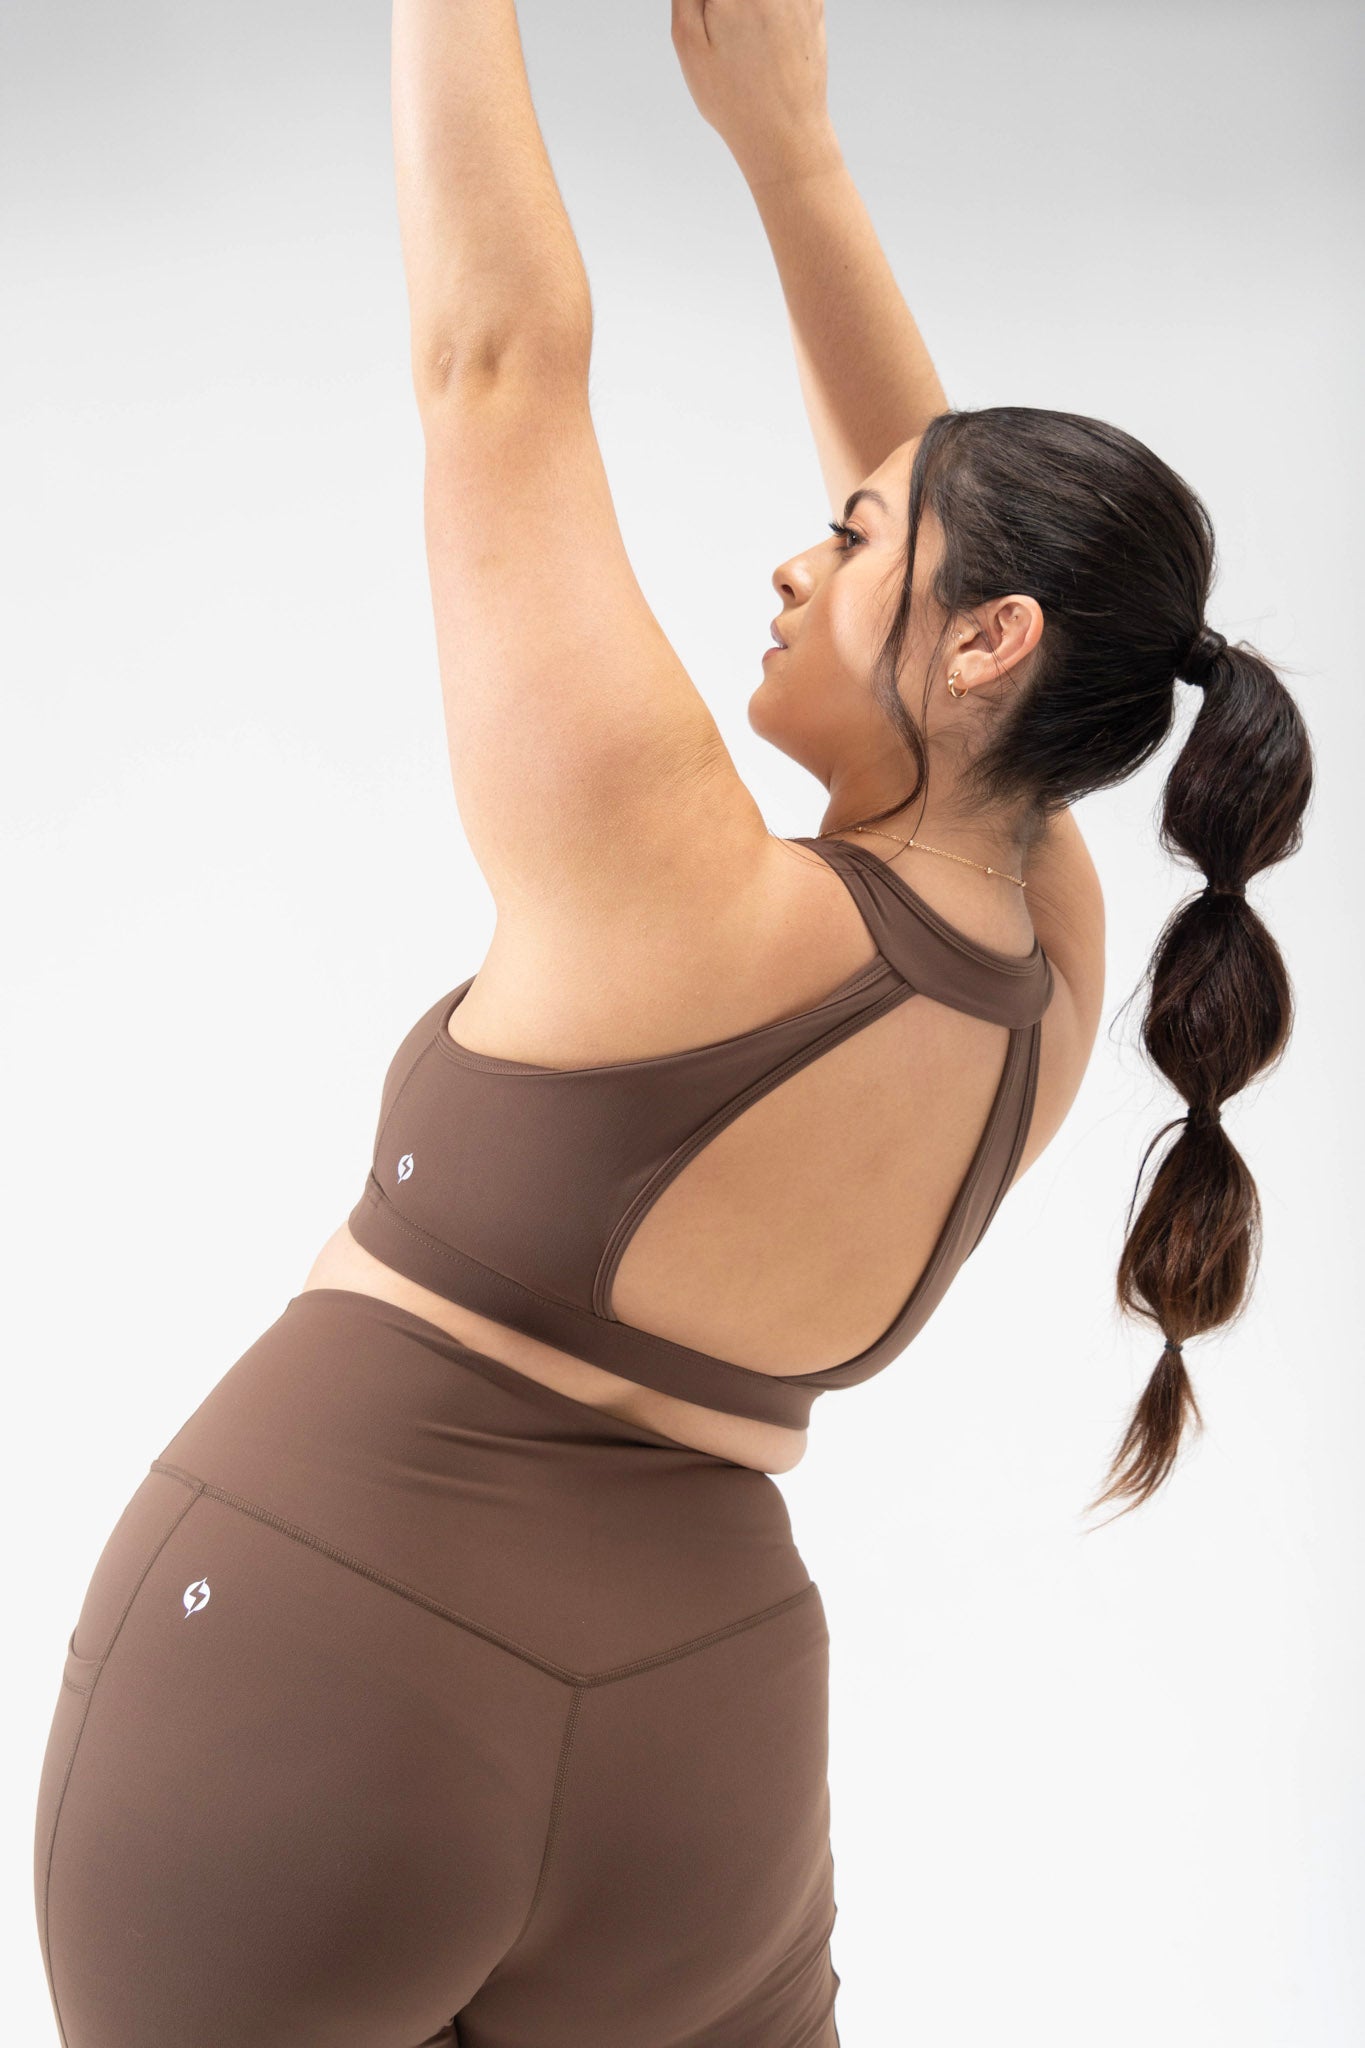 tan sport bra plus size model wears POPFLEX basics collection, captivate bra back detail